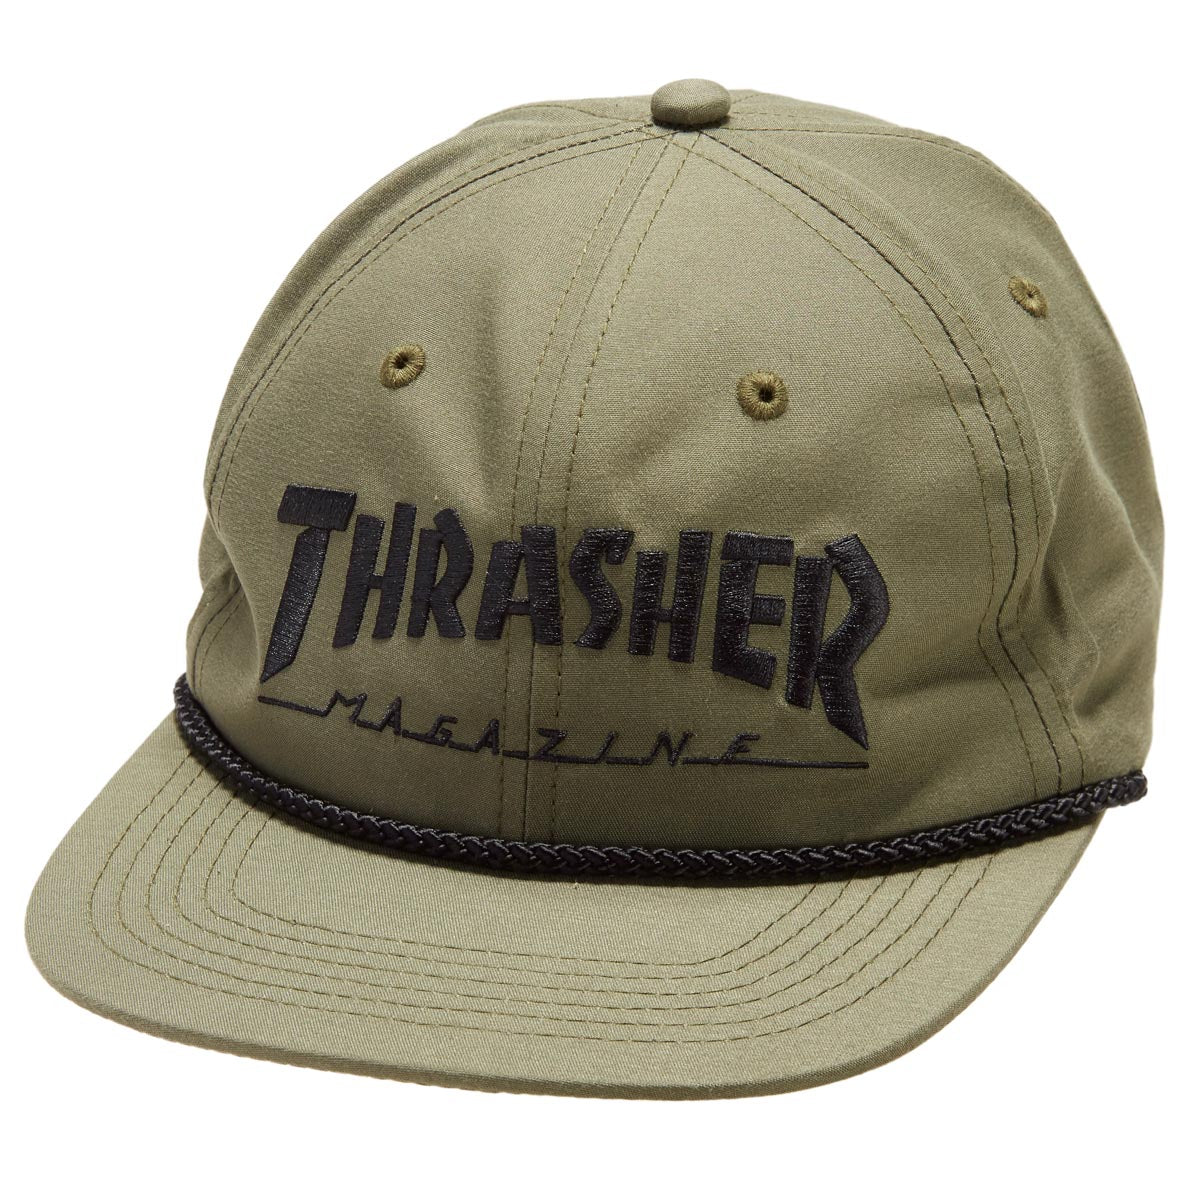 Thrasher Thrasher Rope Hat - Olive/Black image 1